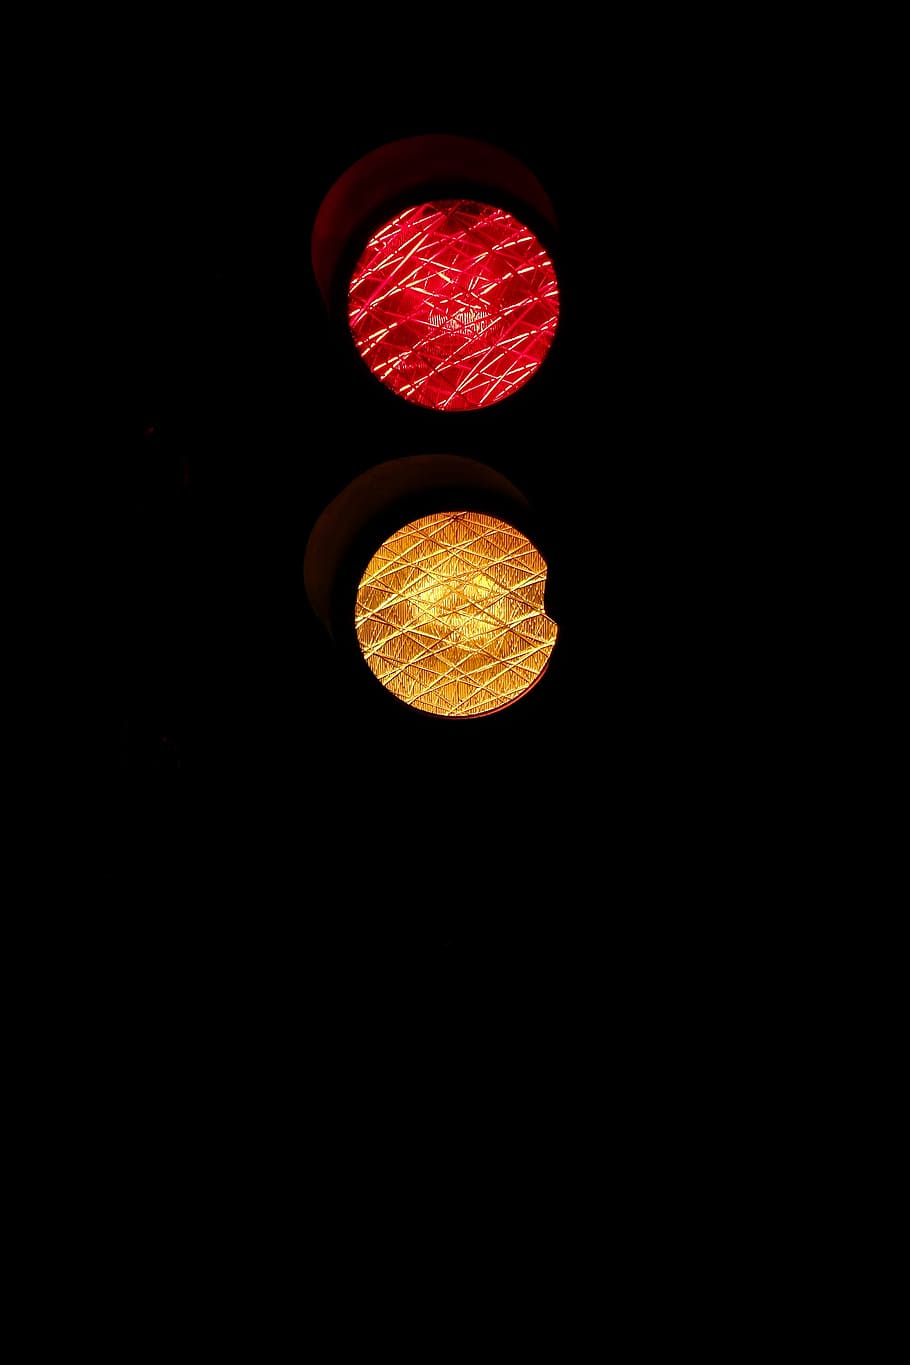 traffic lights, red yellow, wait, traffic signal, light signal, road sign, road, light, beacon, red